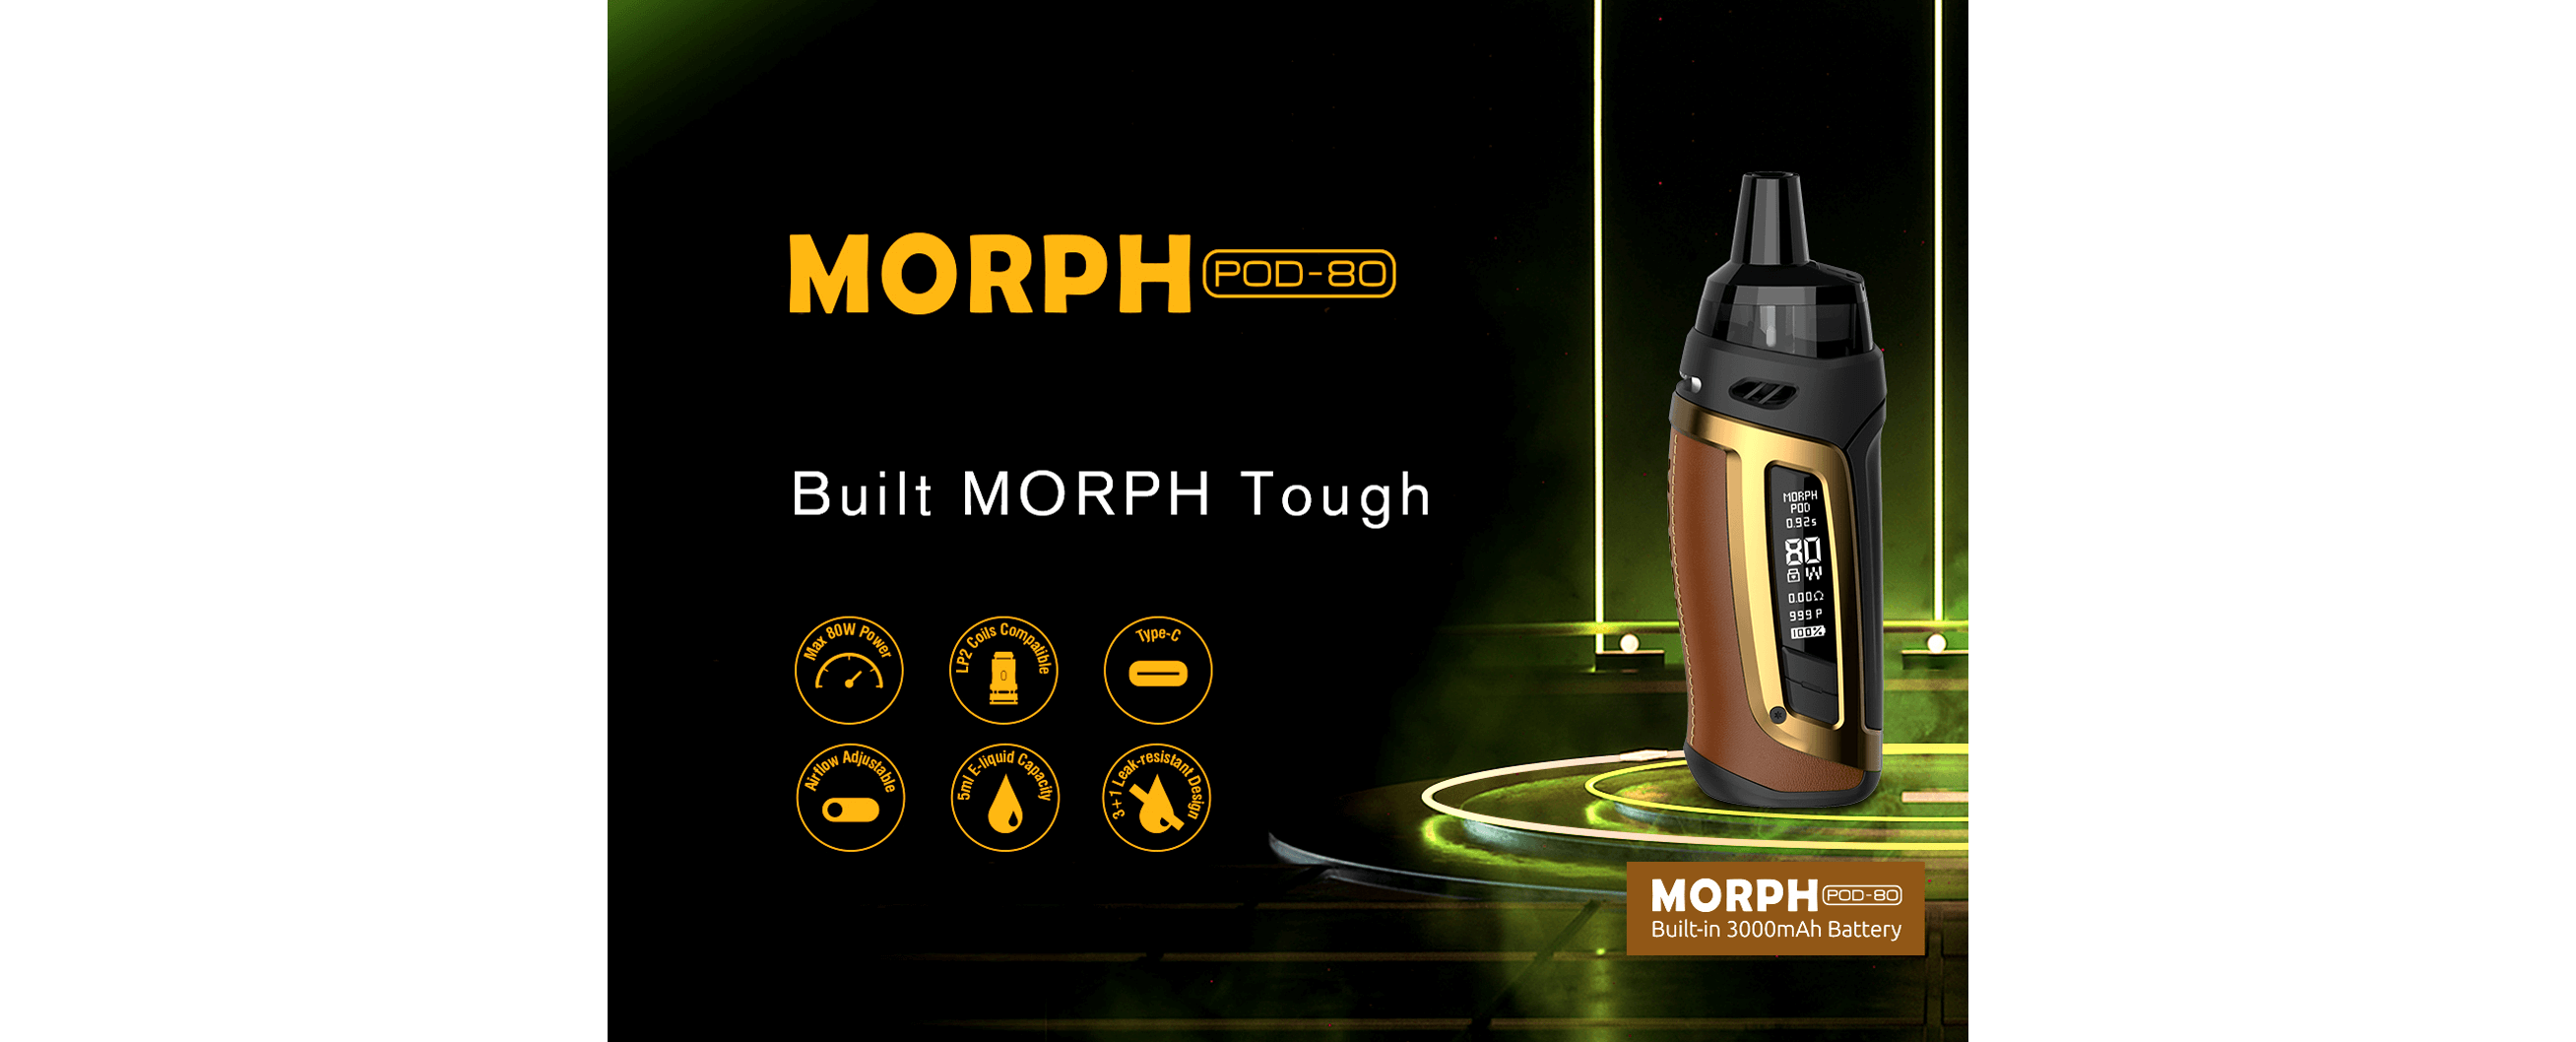 Smok Morph Pod 80 introductory image